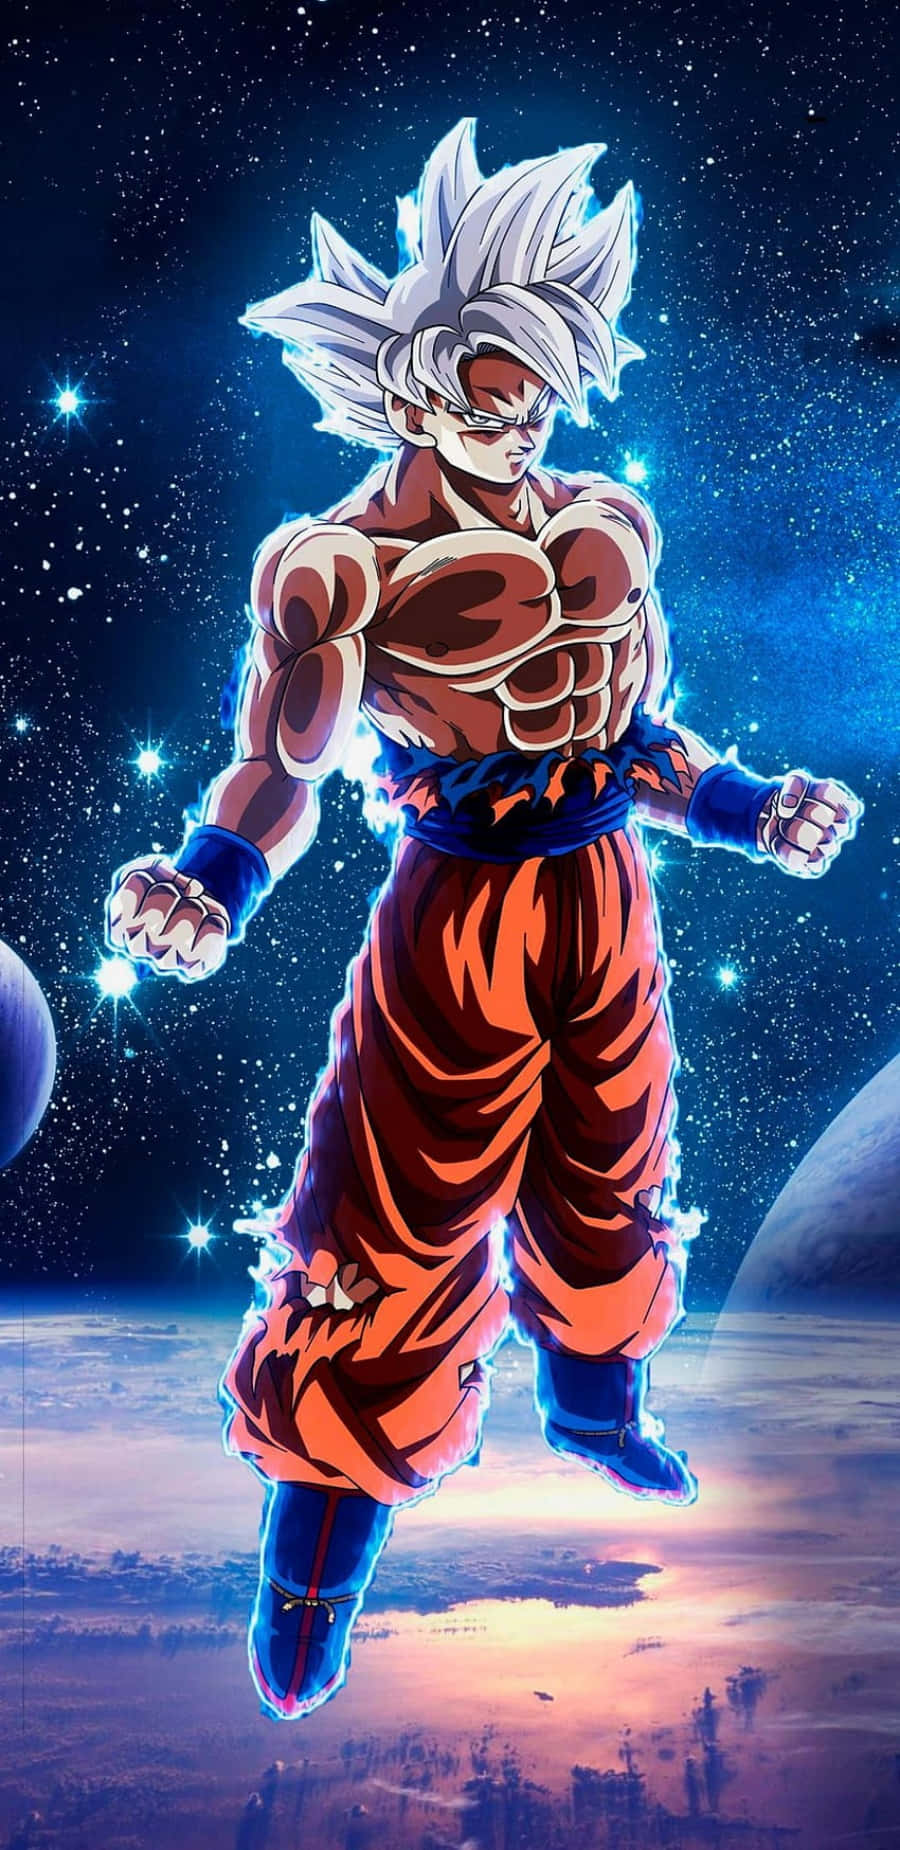 Superb Super Saiyan Son Goku Dragon Ball Super iPhone Wallpaper